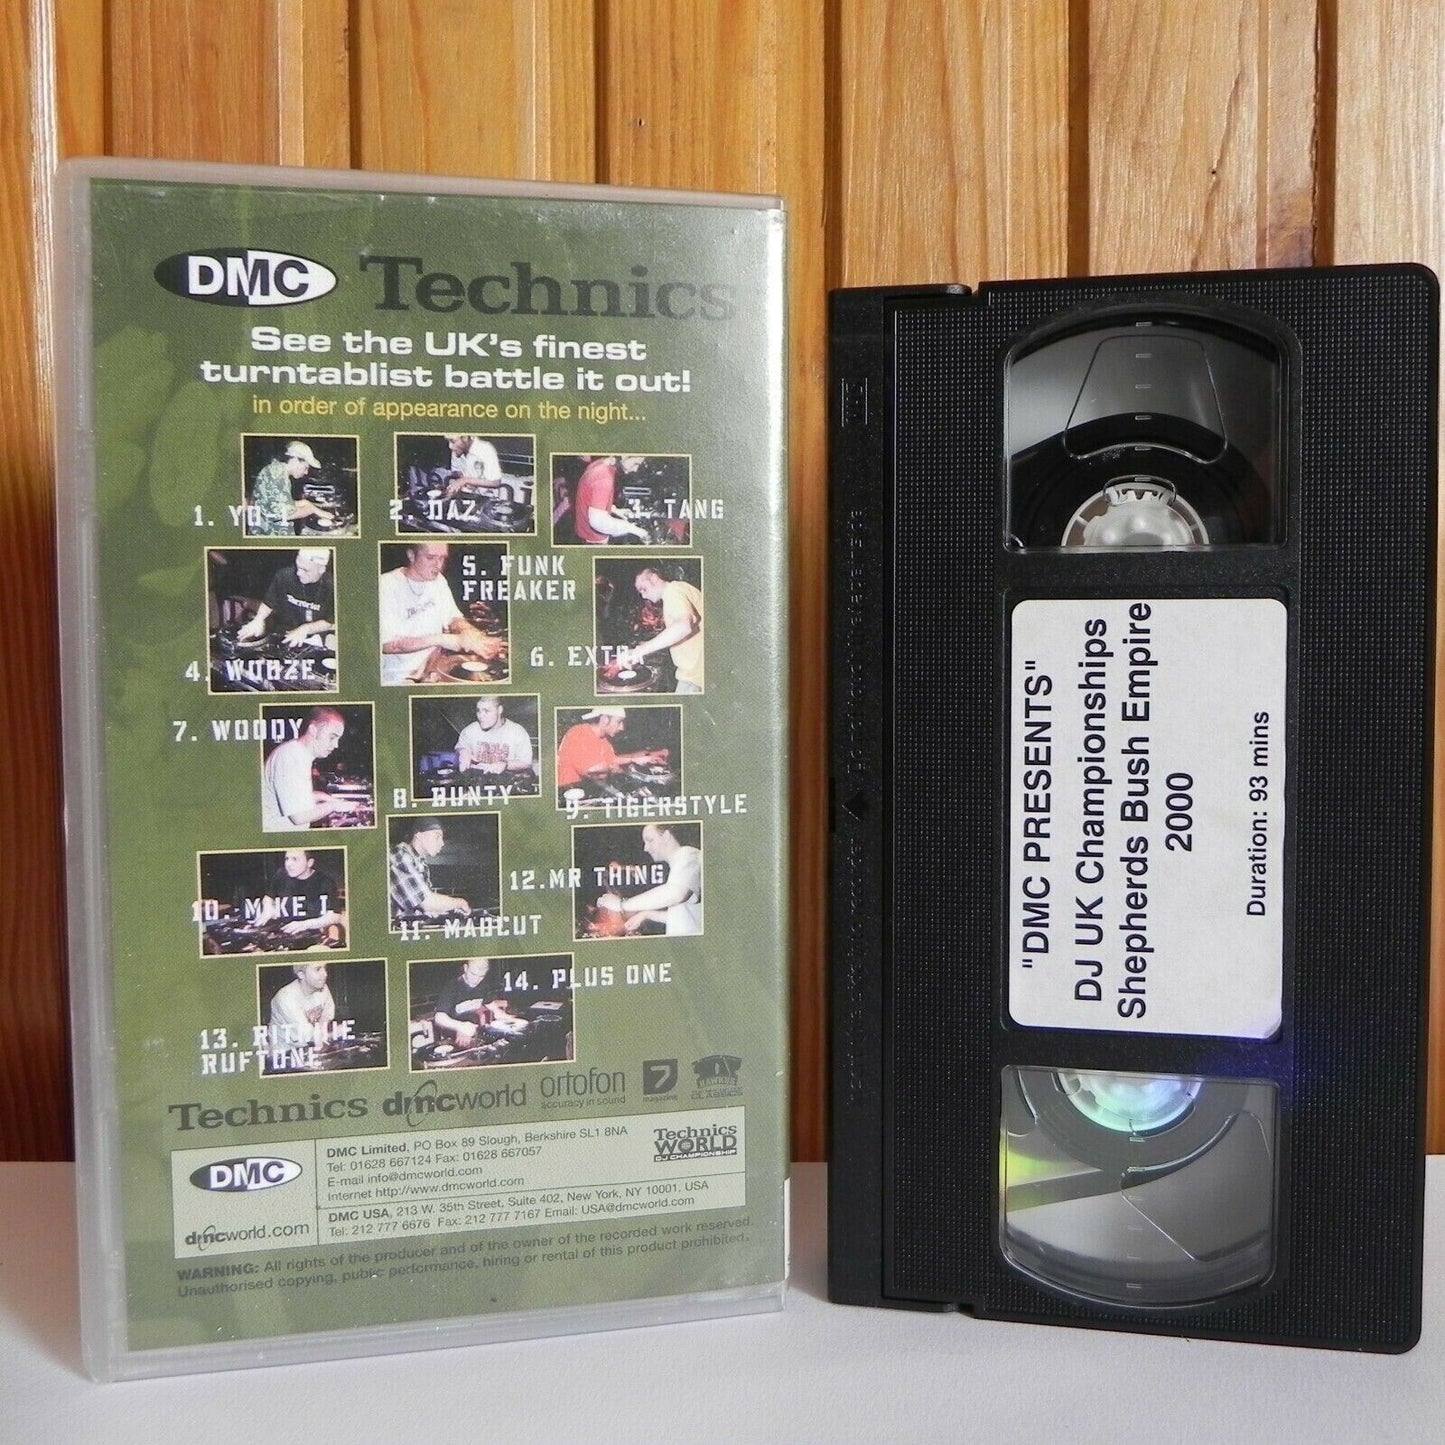 DMC Technics UK DJ Champioship 2000 - 15th July - Shepherds Bush Empire - VHS-